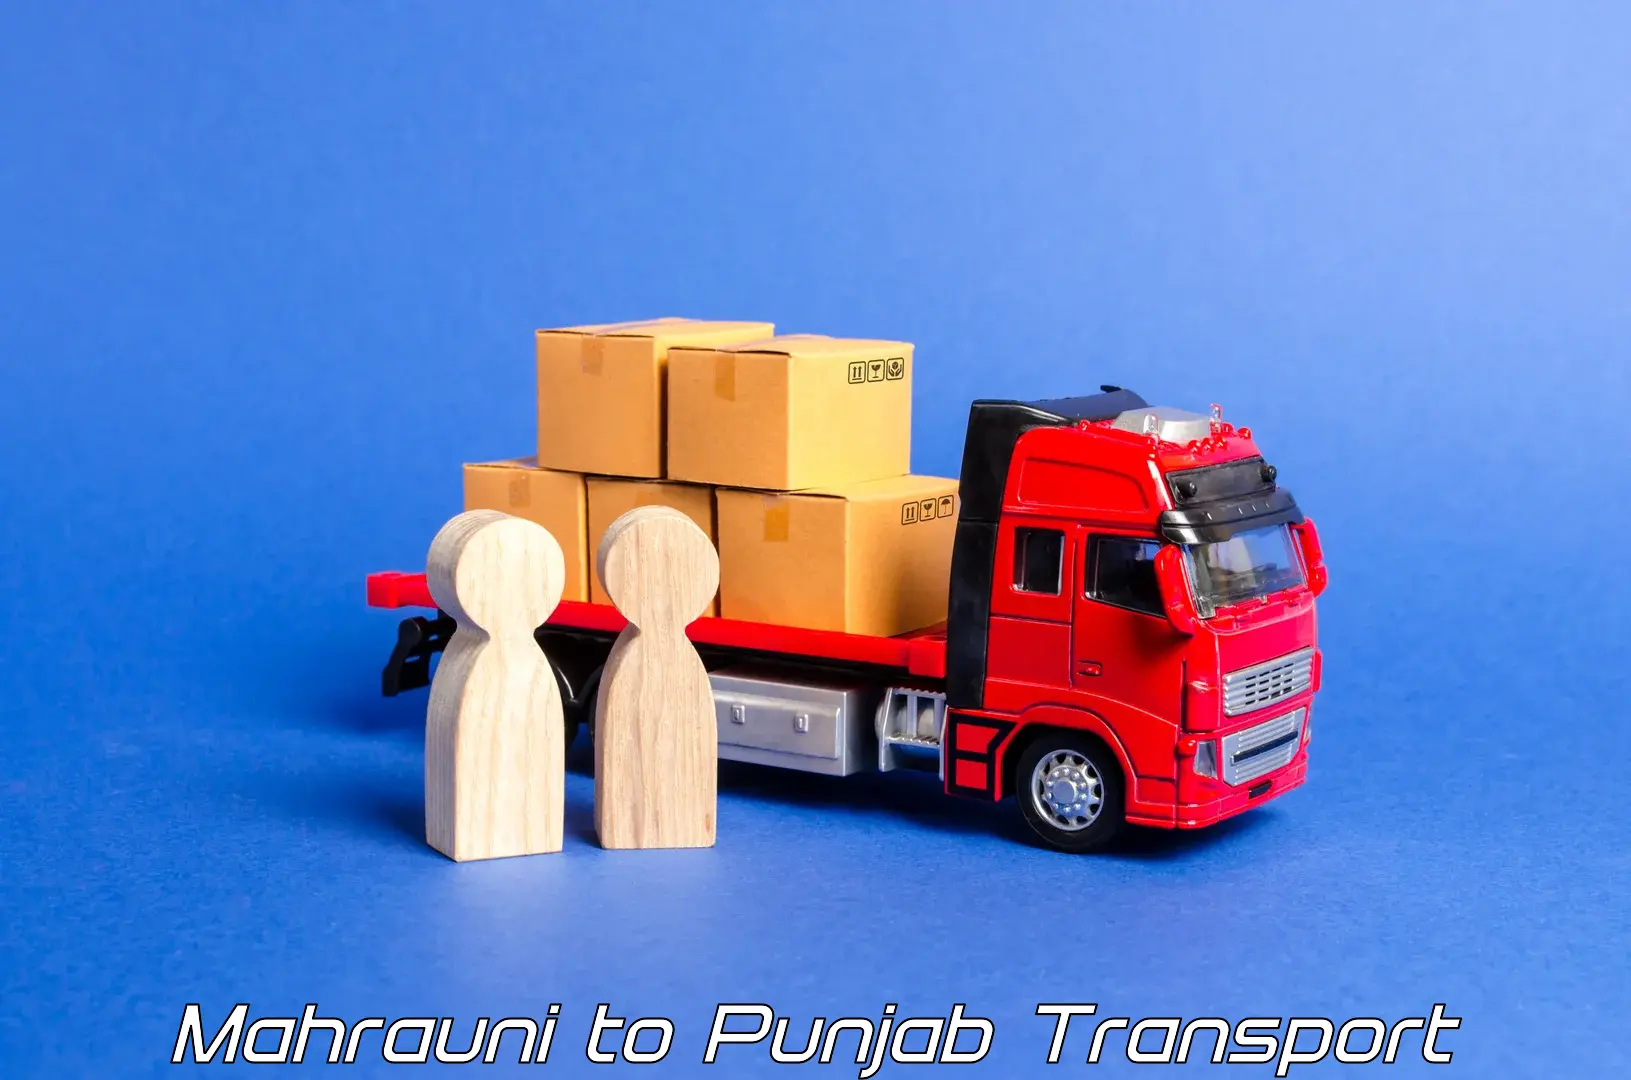 Pick up transport service Mahrauni to Tarsikka